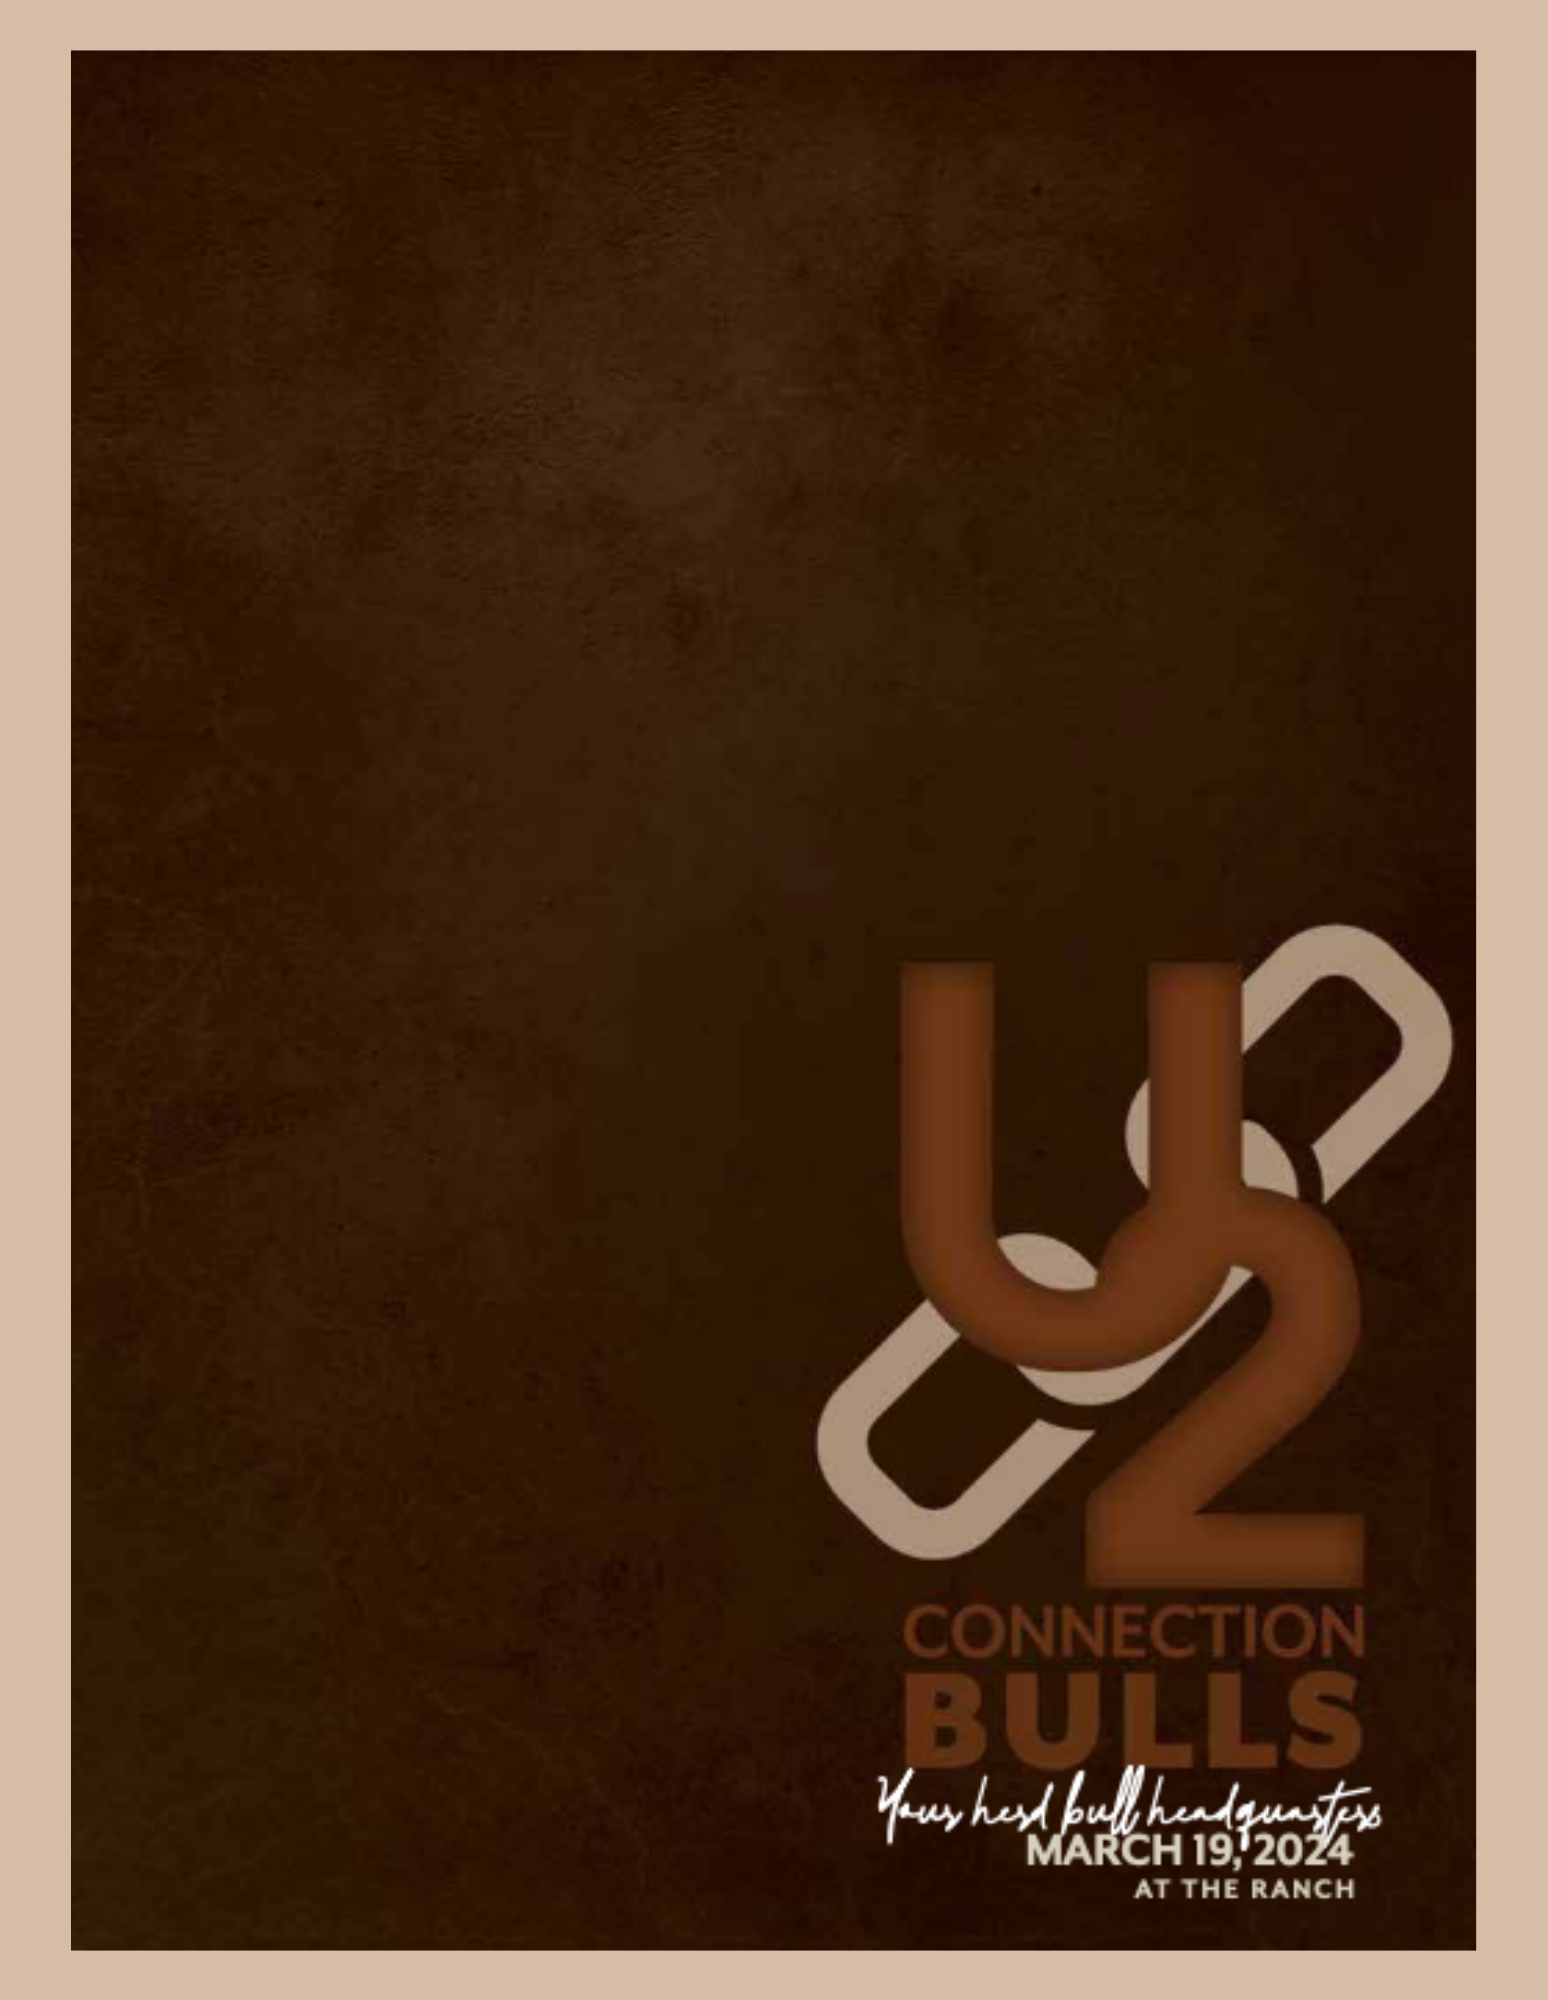 U2 Quality Seedstock Bull Sale